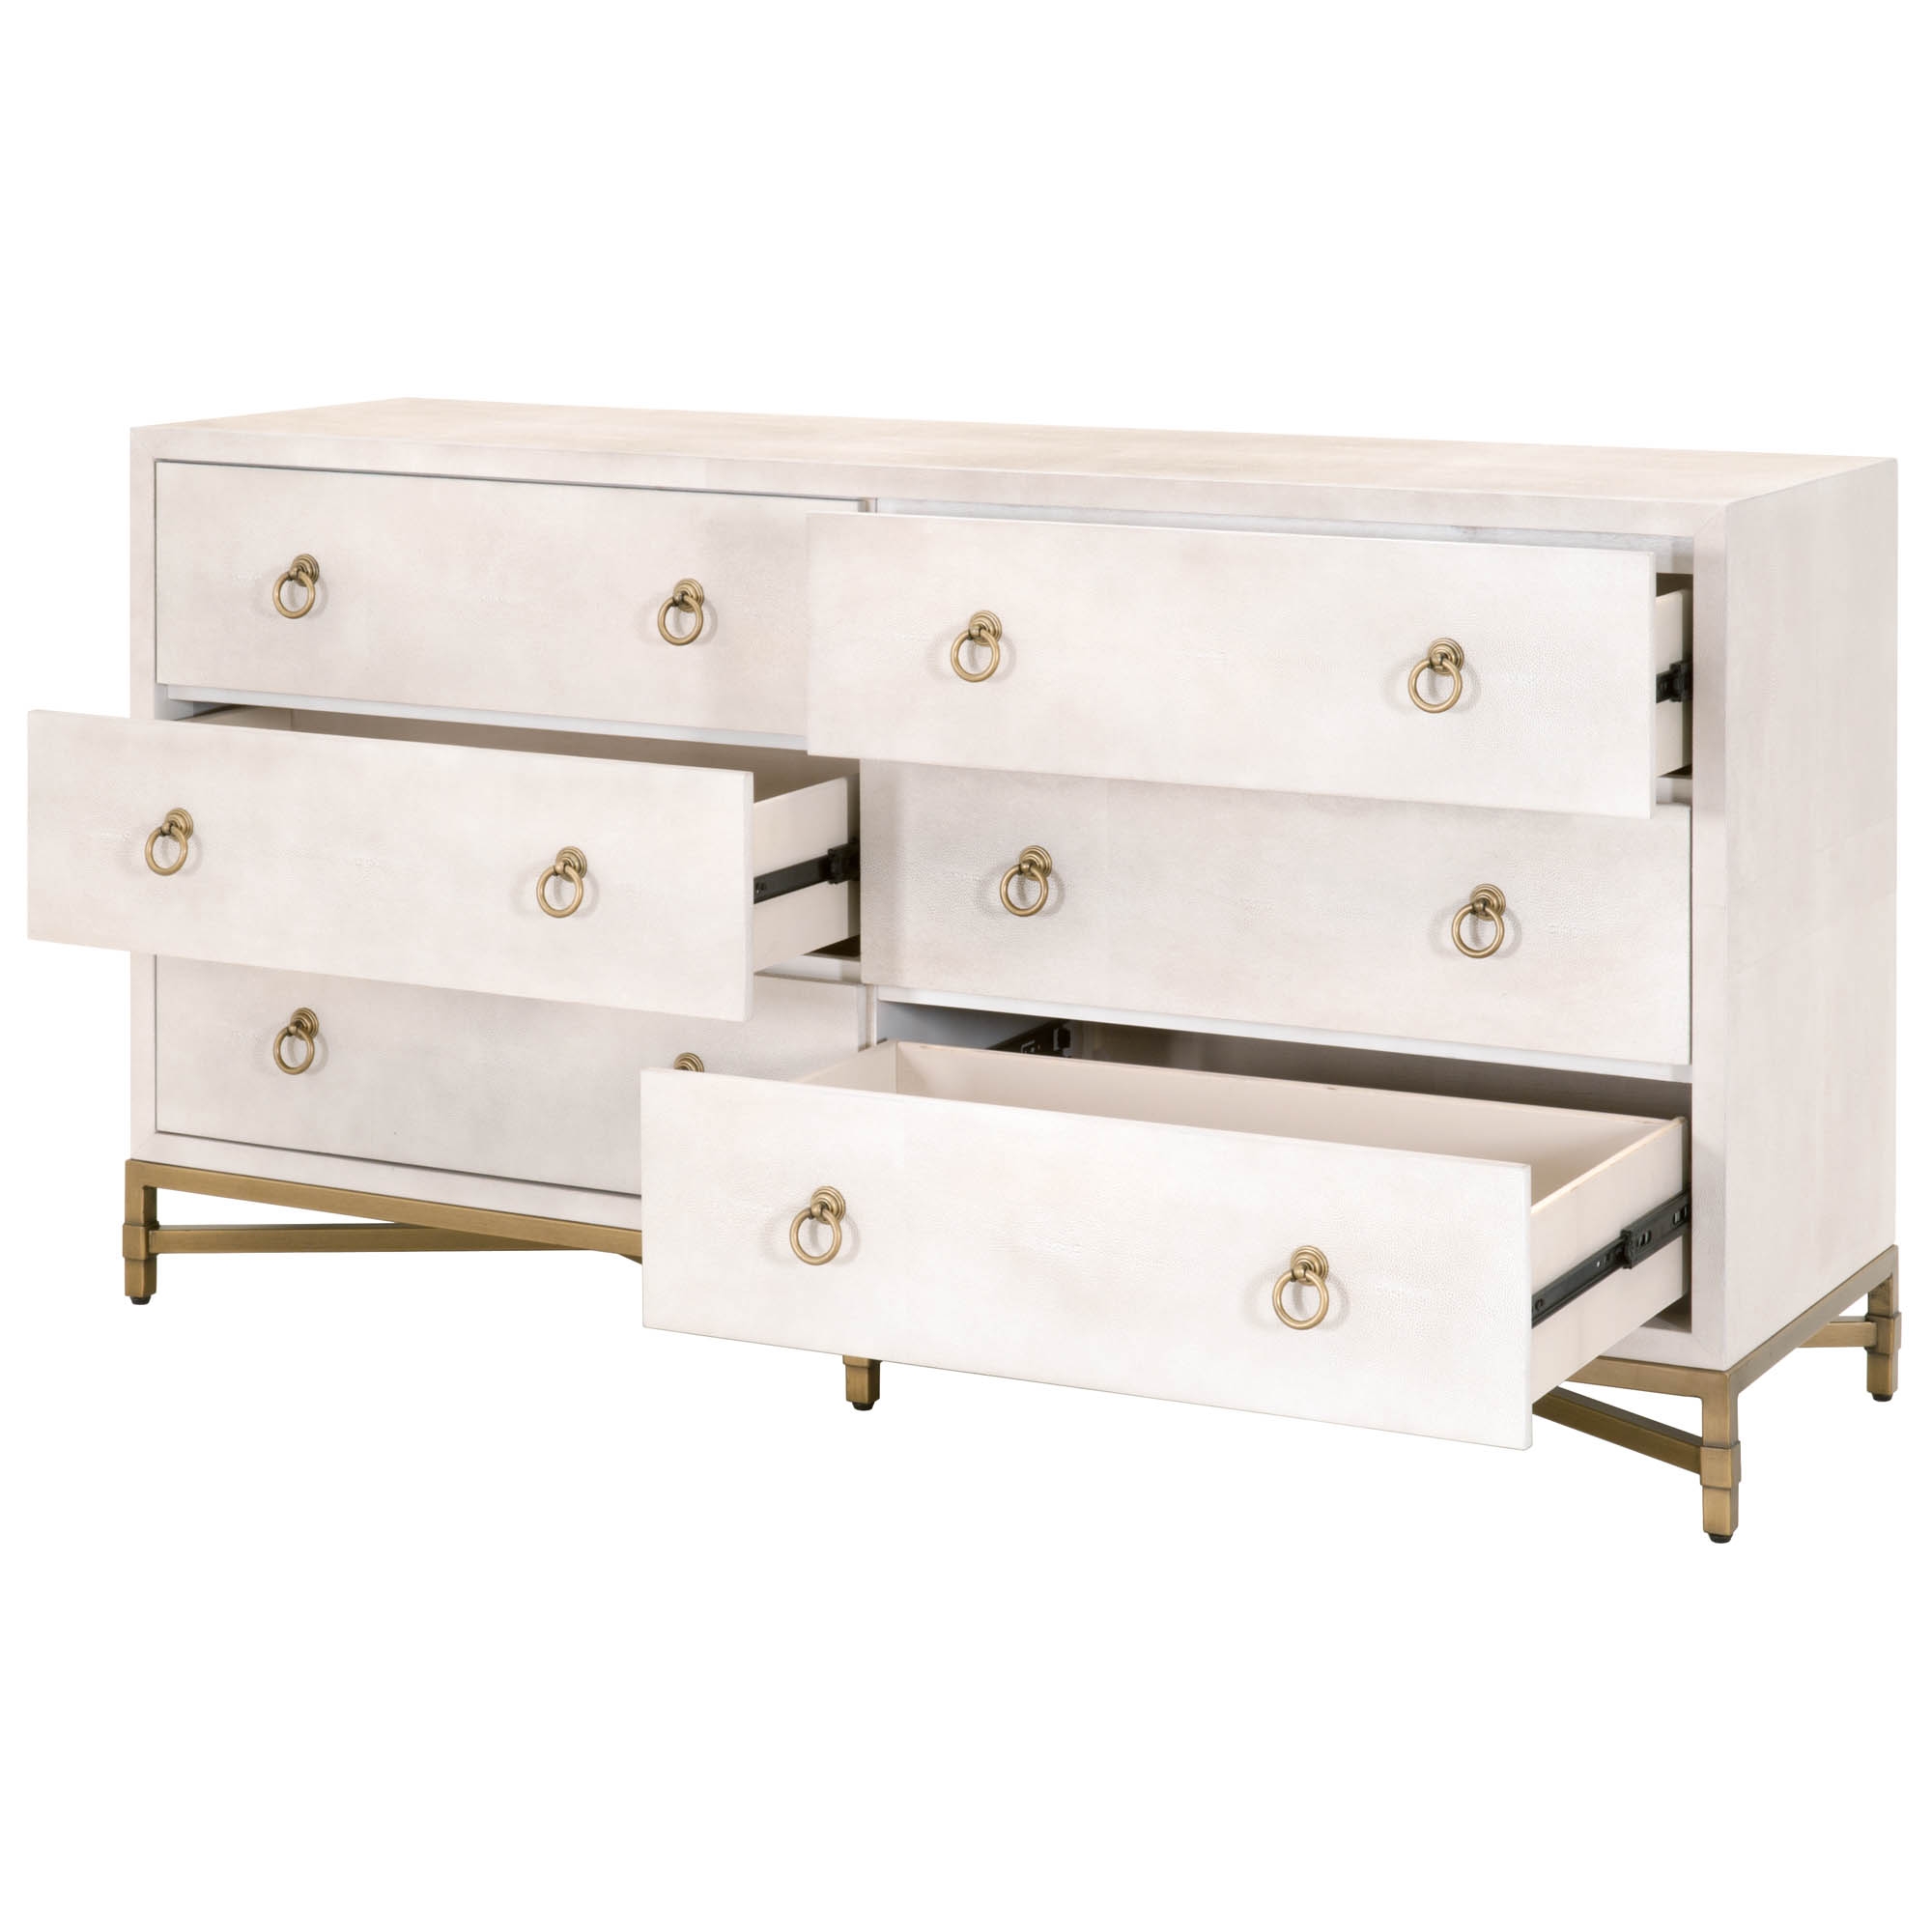 Colette Shagreen 6-Drawer Double Dresser, White & Gold - Image 3